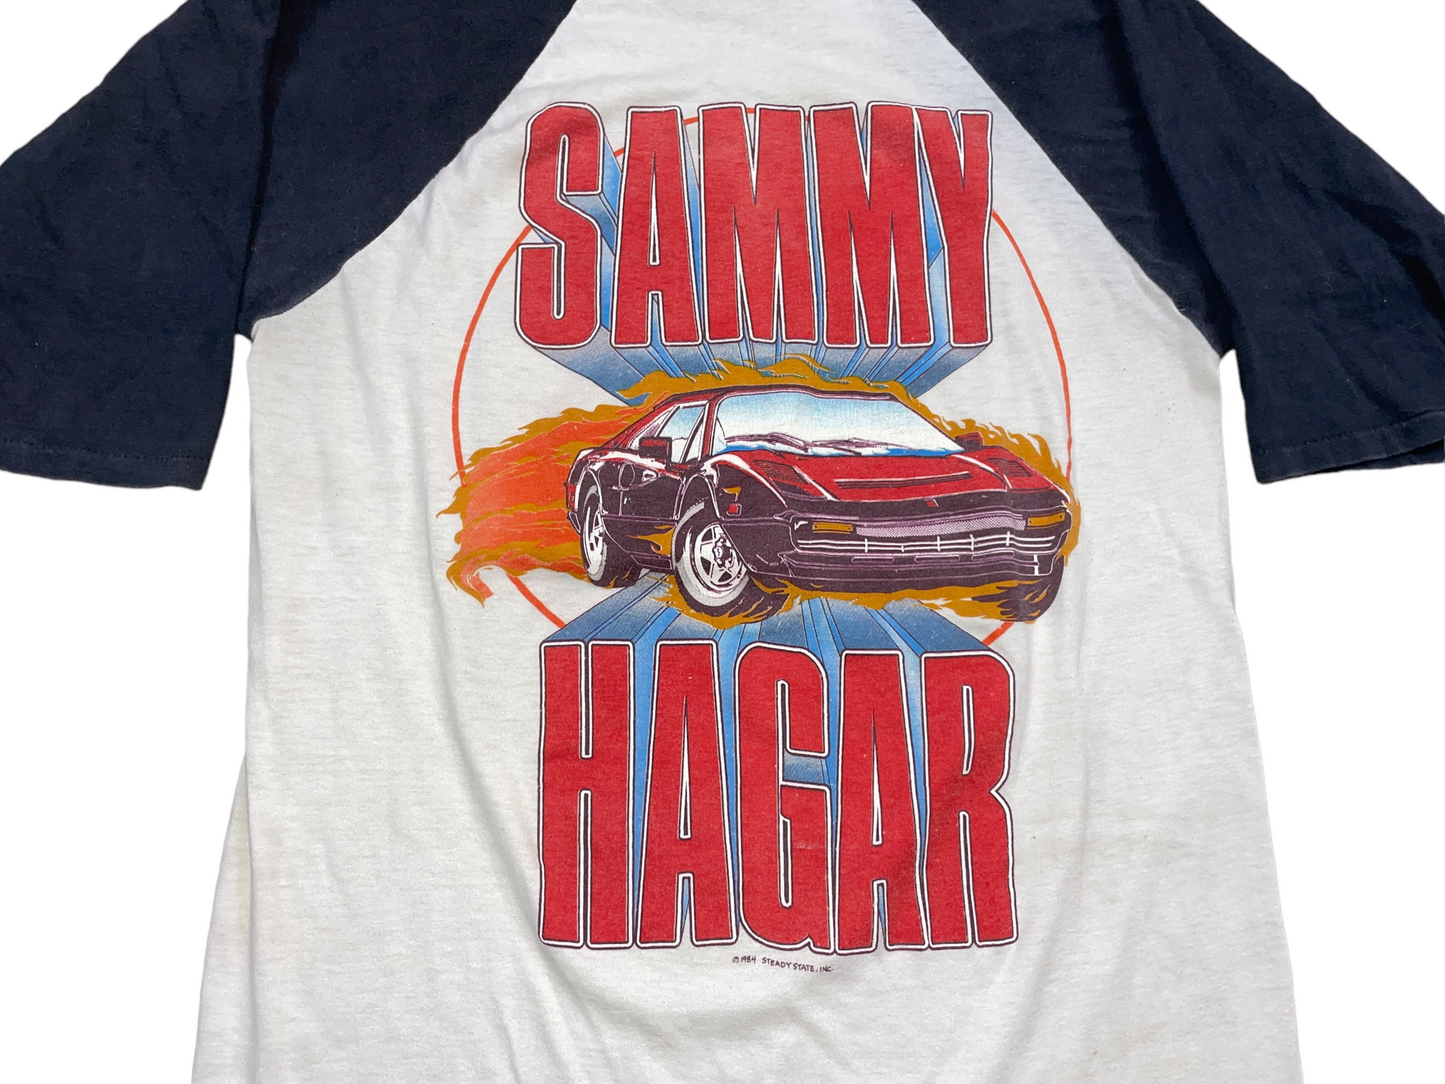 Vintage 1984 Sammy Hagar Tour Shirt